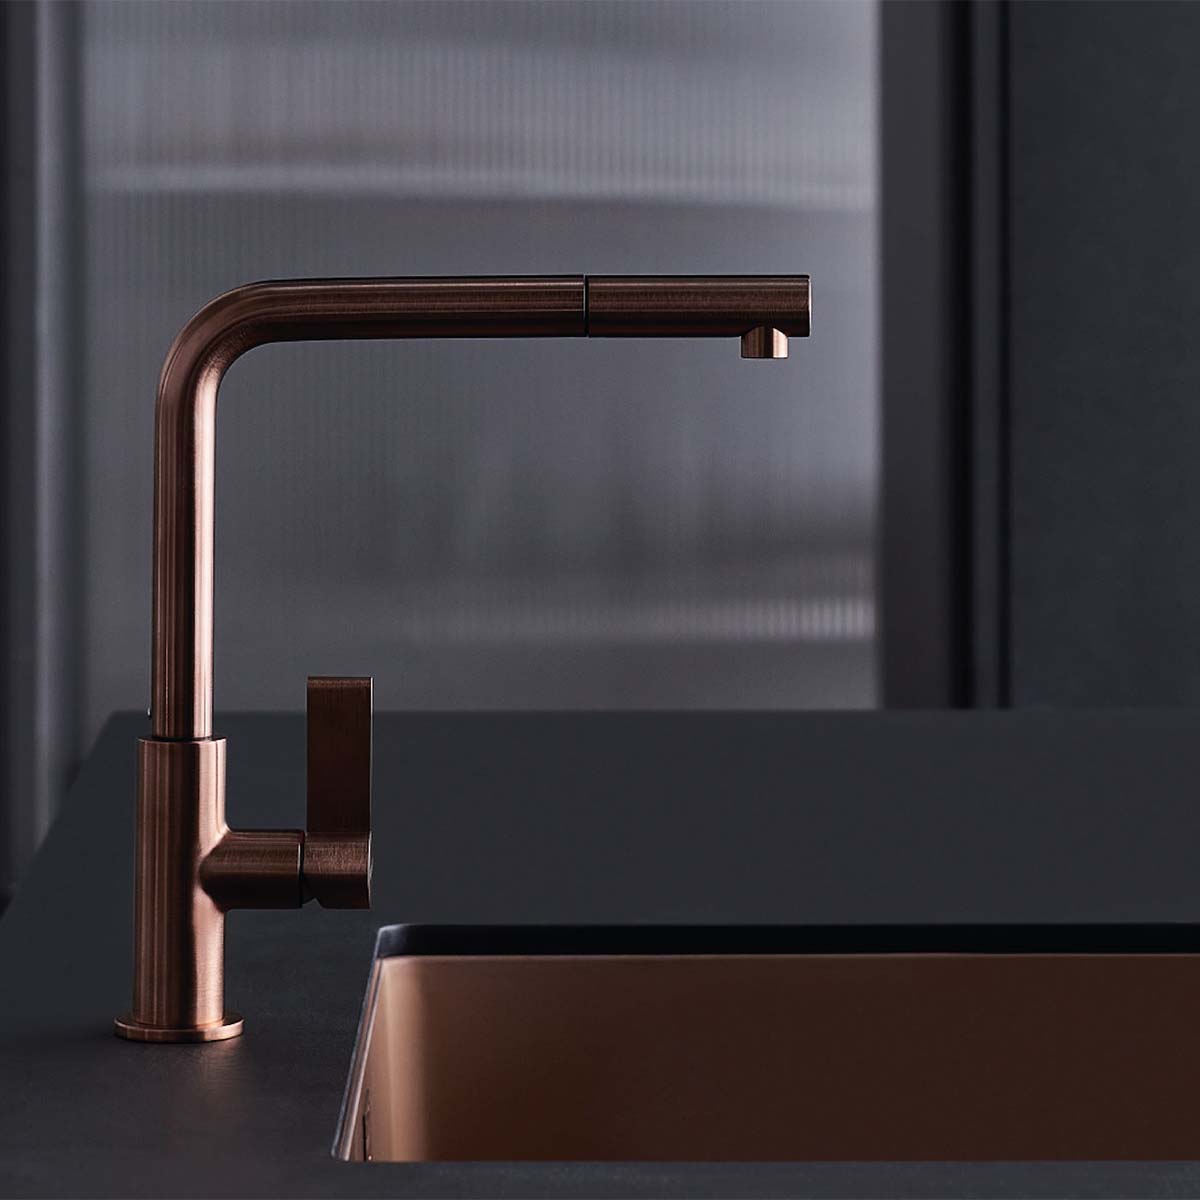 Foster vela plus aesthetica single lever kitchen tap copper pvd feature 3